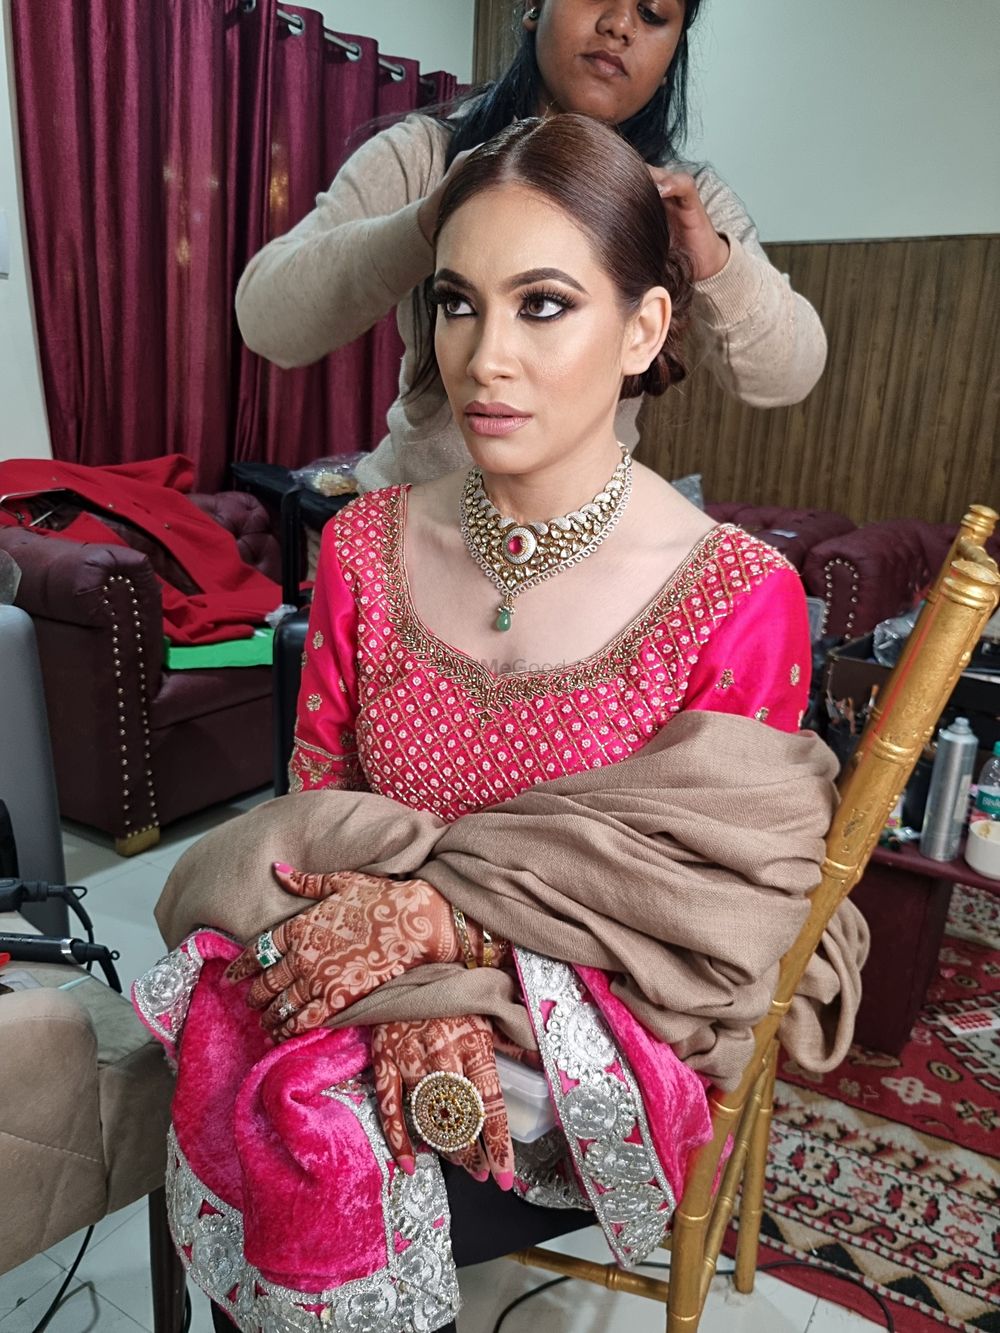 Photo From Bride Shrishti! - By Swati Ale Makeup Artist